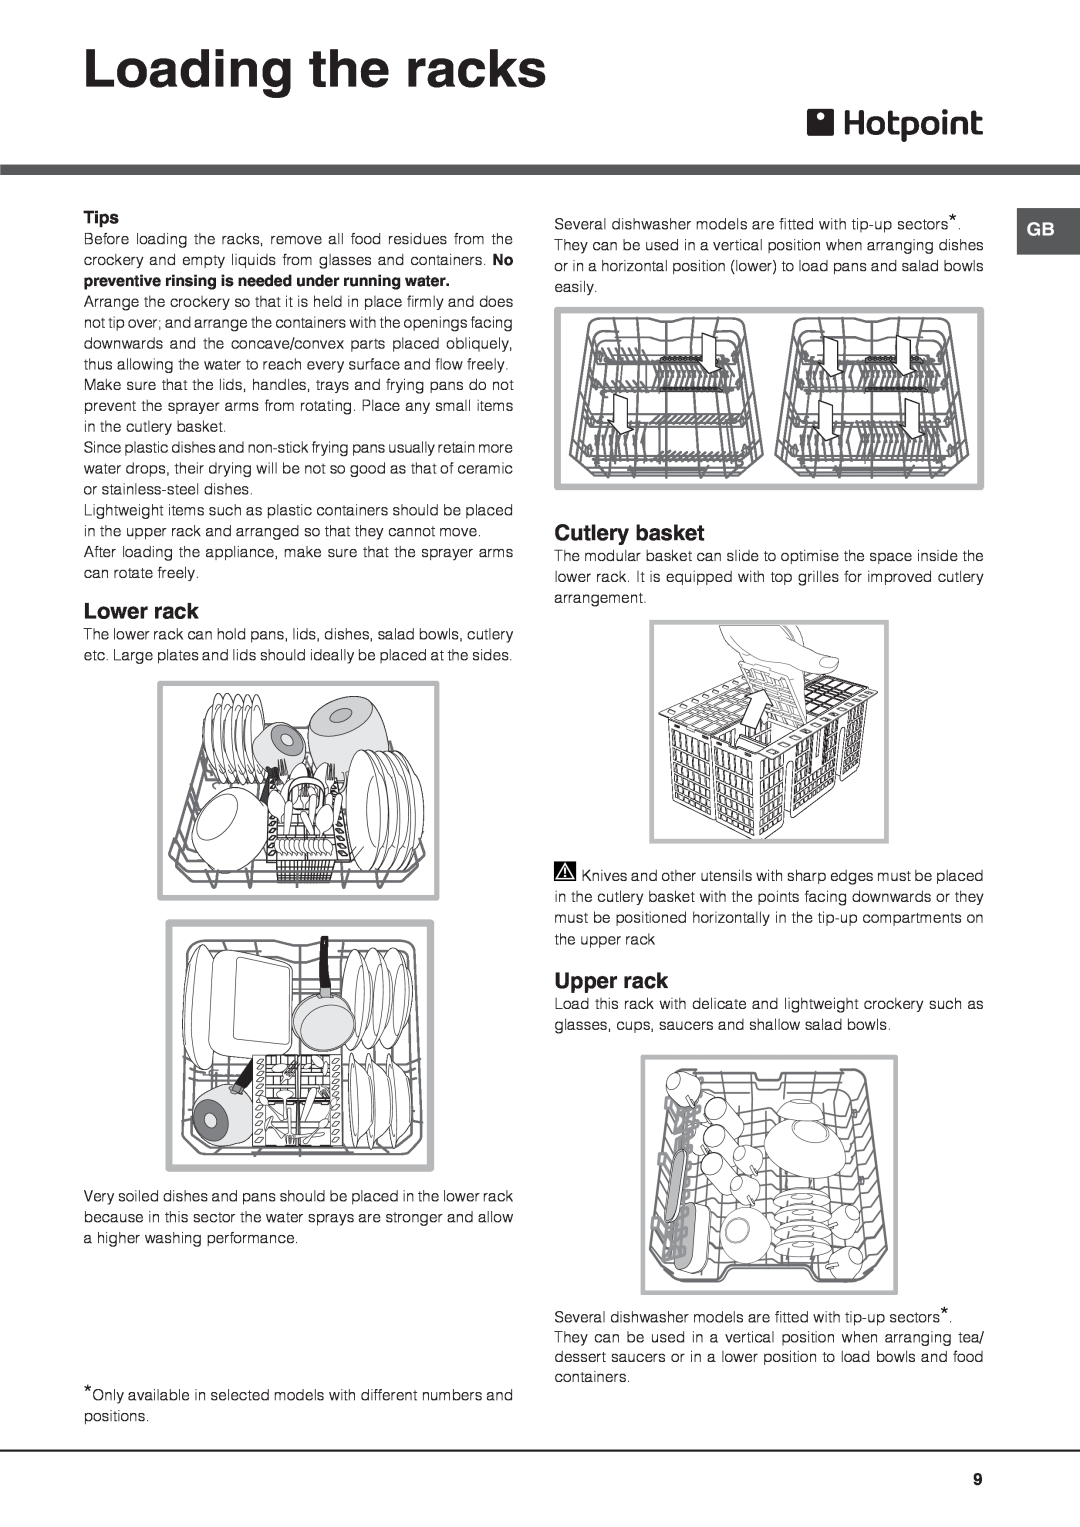 Hotpoint LTB 4B019 manual Loading the racks, Lower rack, Cutlery basket, Upper rack, Tips 